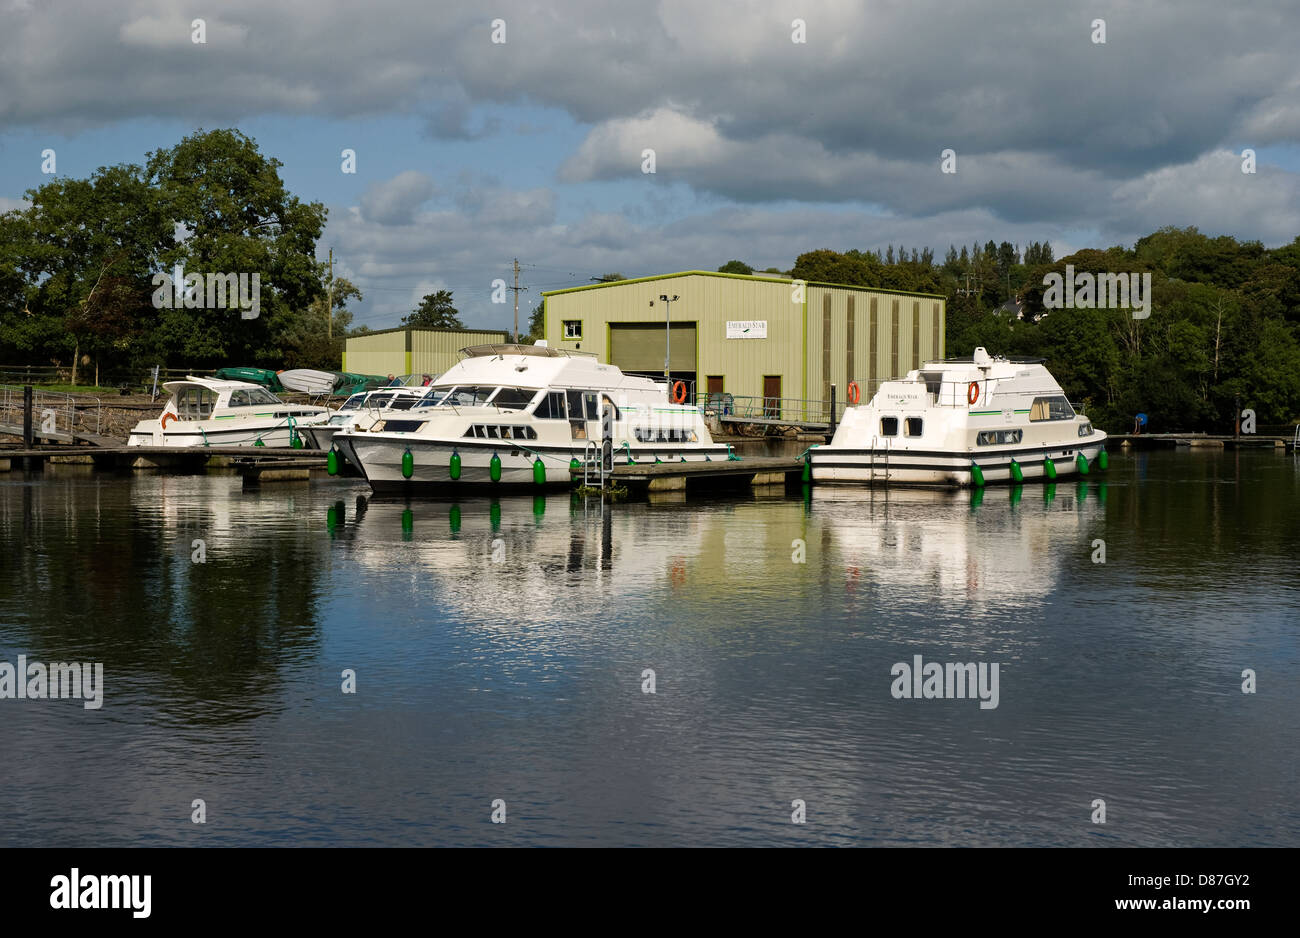 Emerald Star Boat Hire Depot, Belturbet, Upper Lough Erne, Co Cavan, Ireland  Stock Photo - Alamy